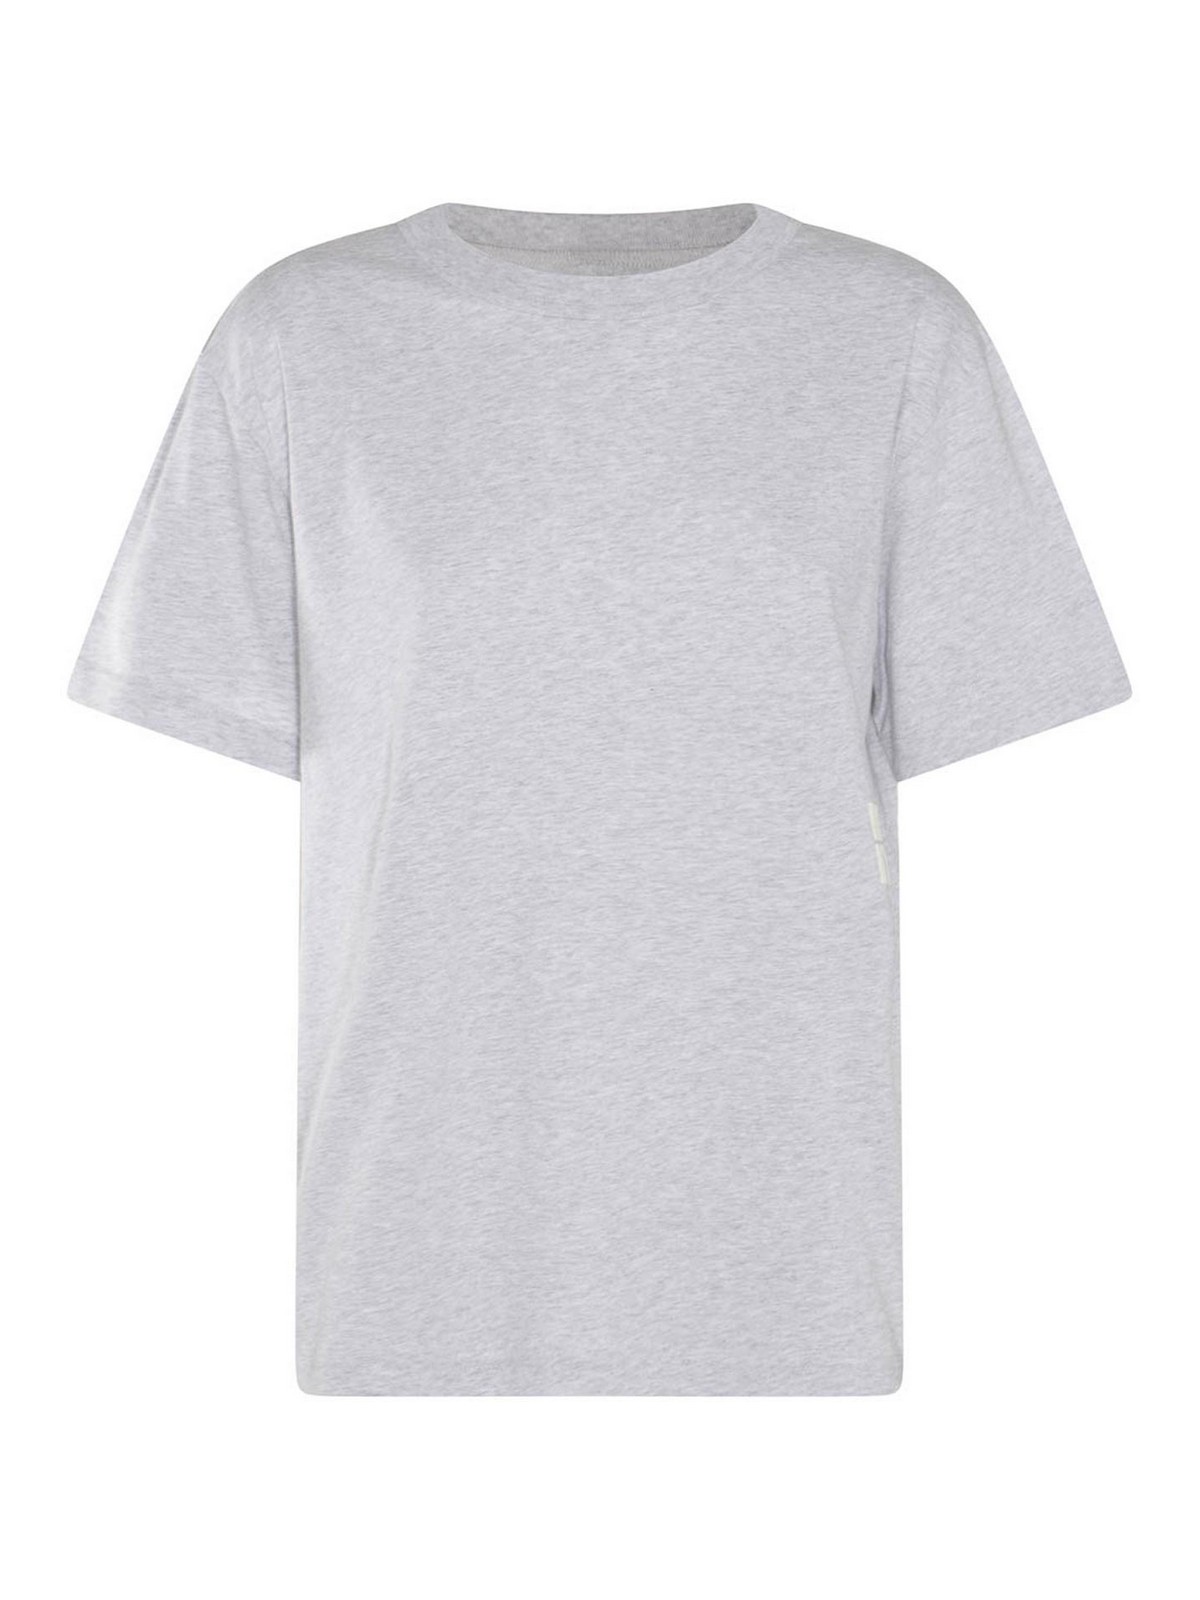 Alexander Wang Light Grey Cotton T-shirt In Gray